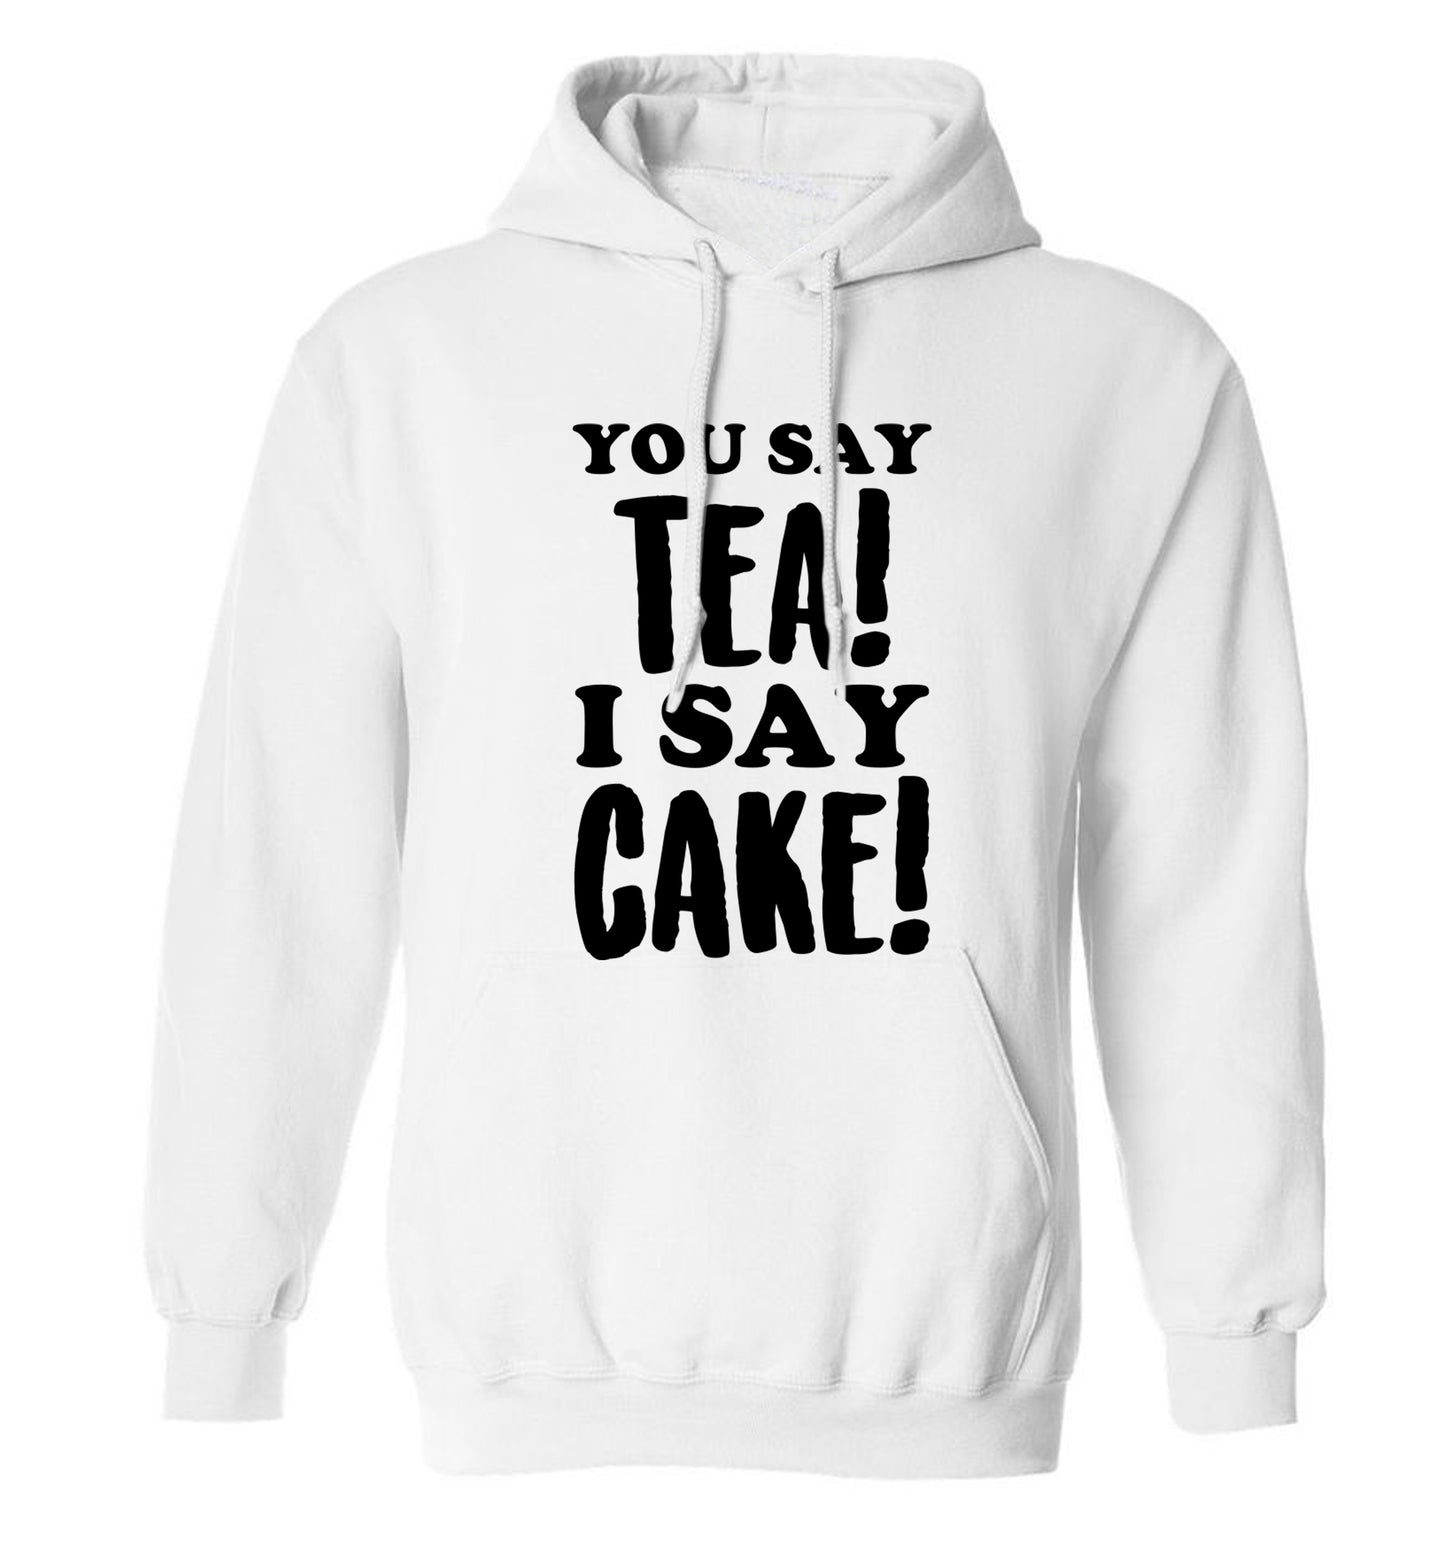 You say tea I say cake! adults unisex white hoodie 2XL